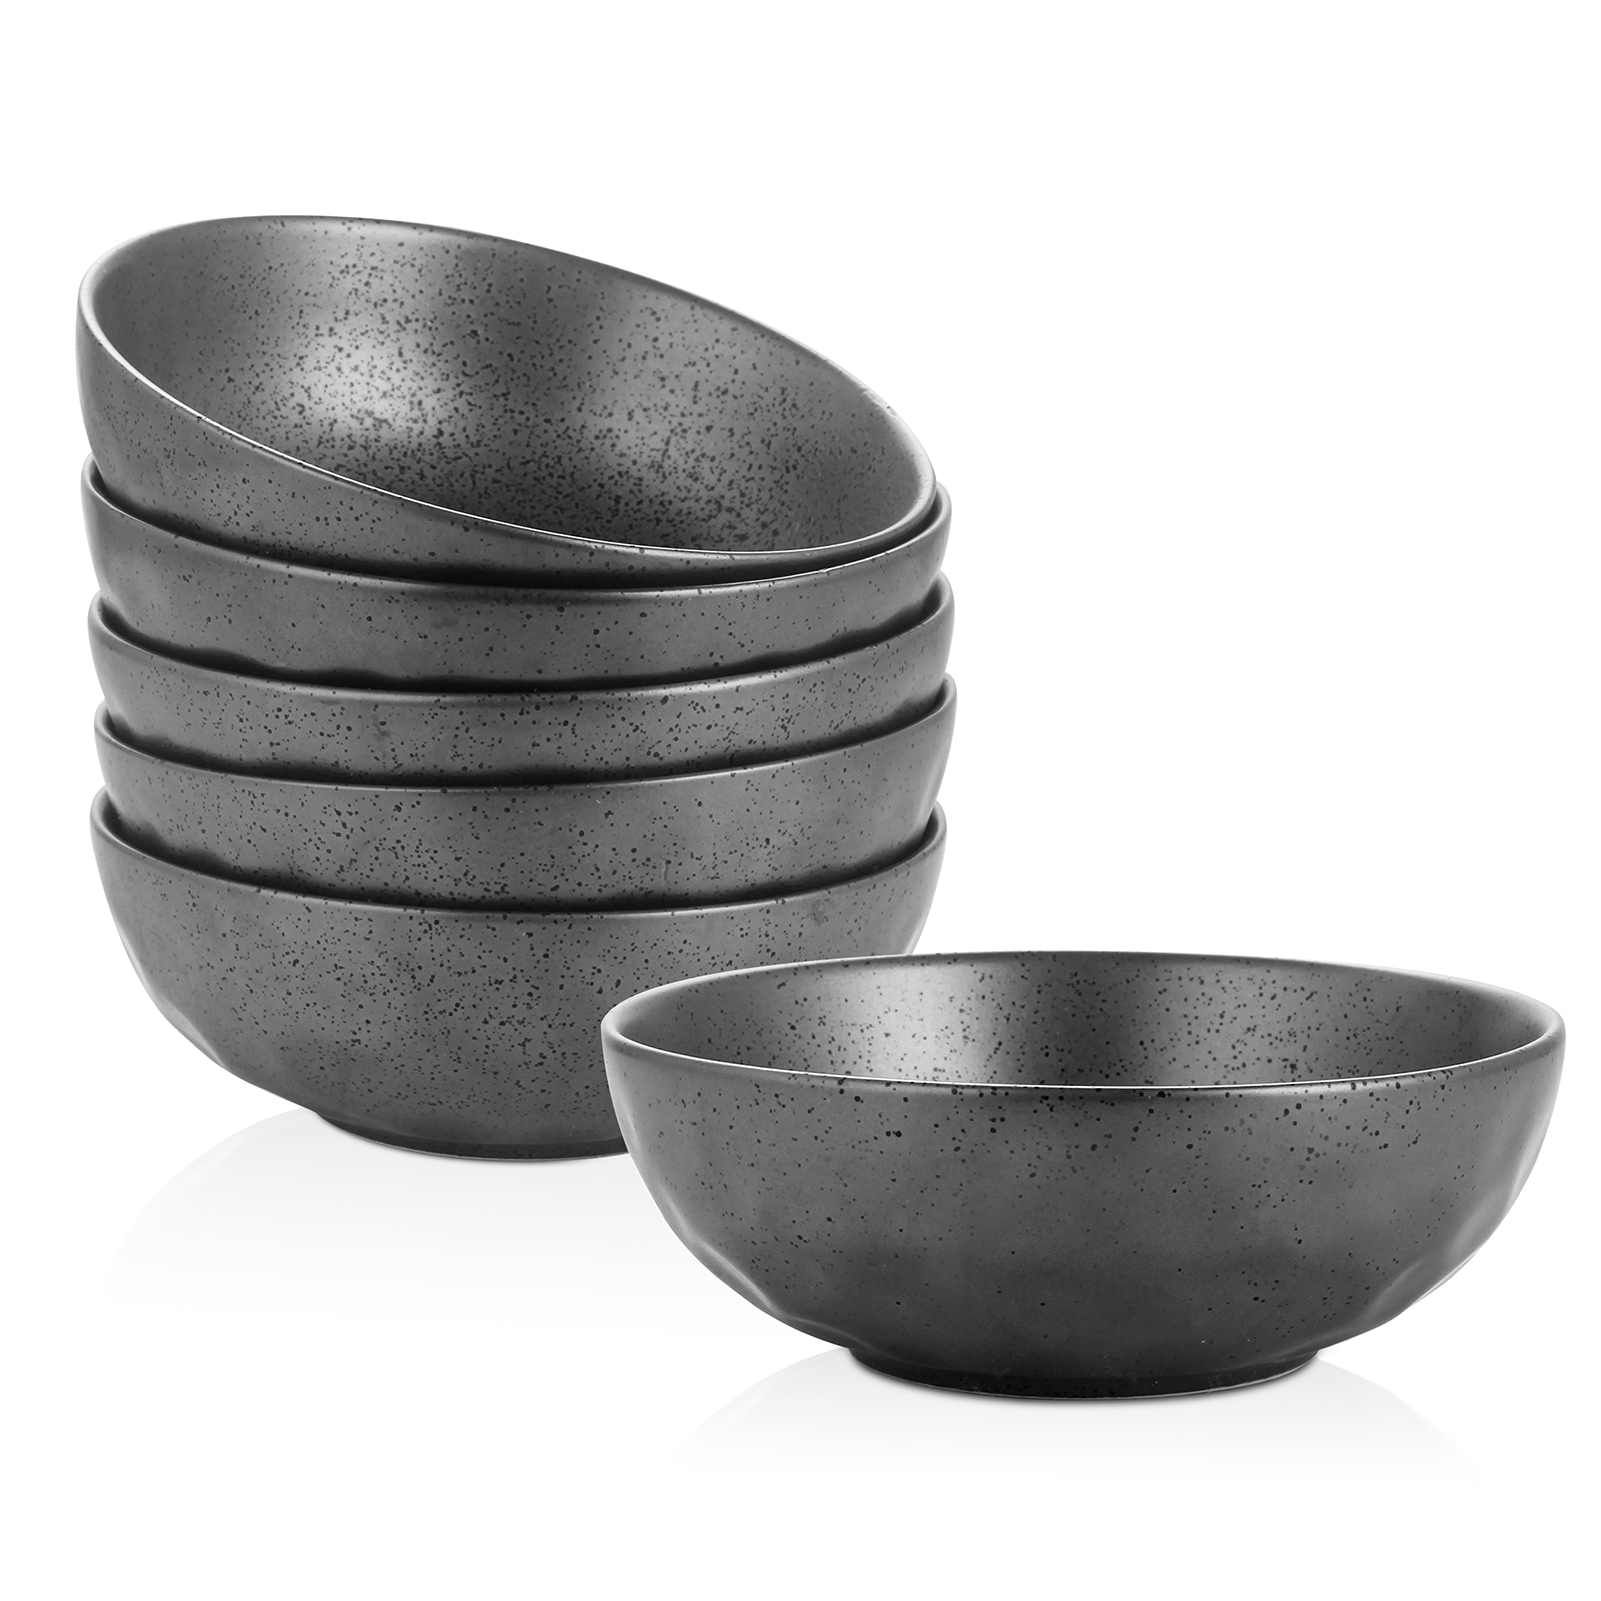 large black rasp bowl ceramic grater from spain